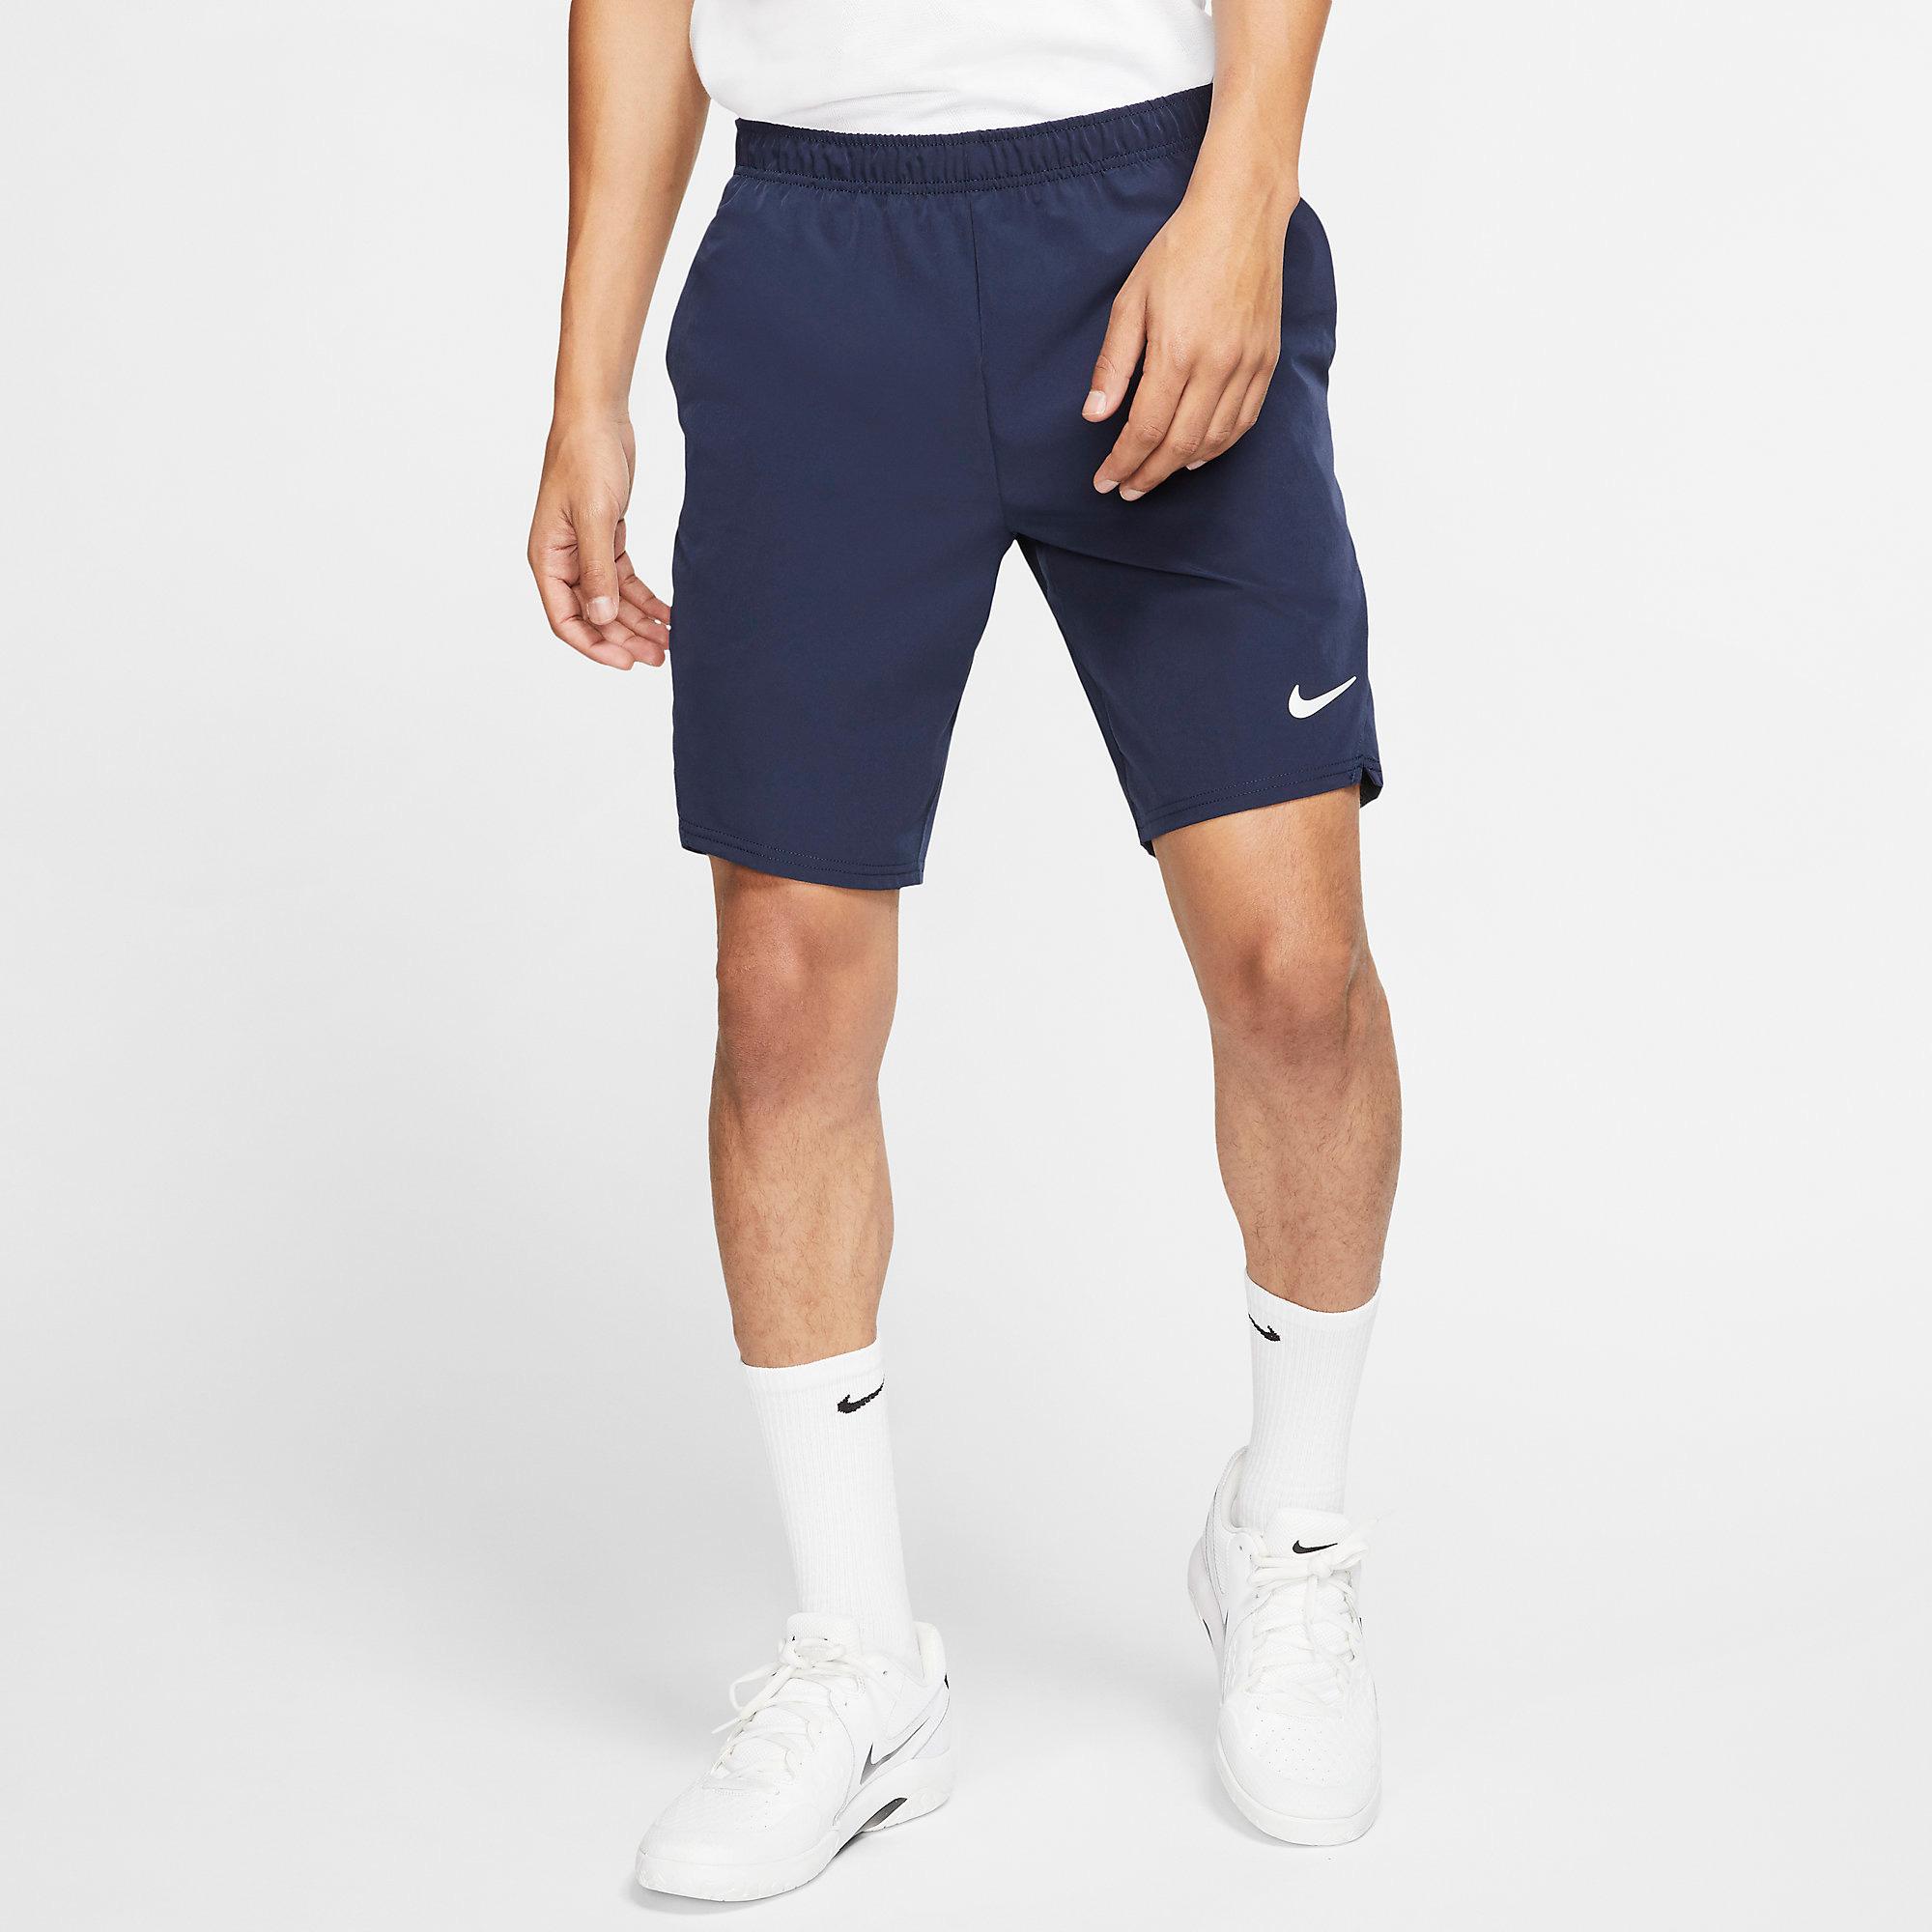 Nike Mens Flex Ace 9 Inch Tennis Shorts - Obsidian/White - Tennisnuts.com